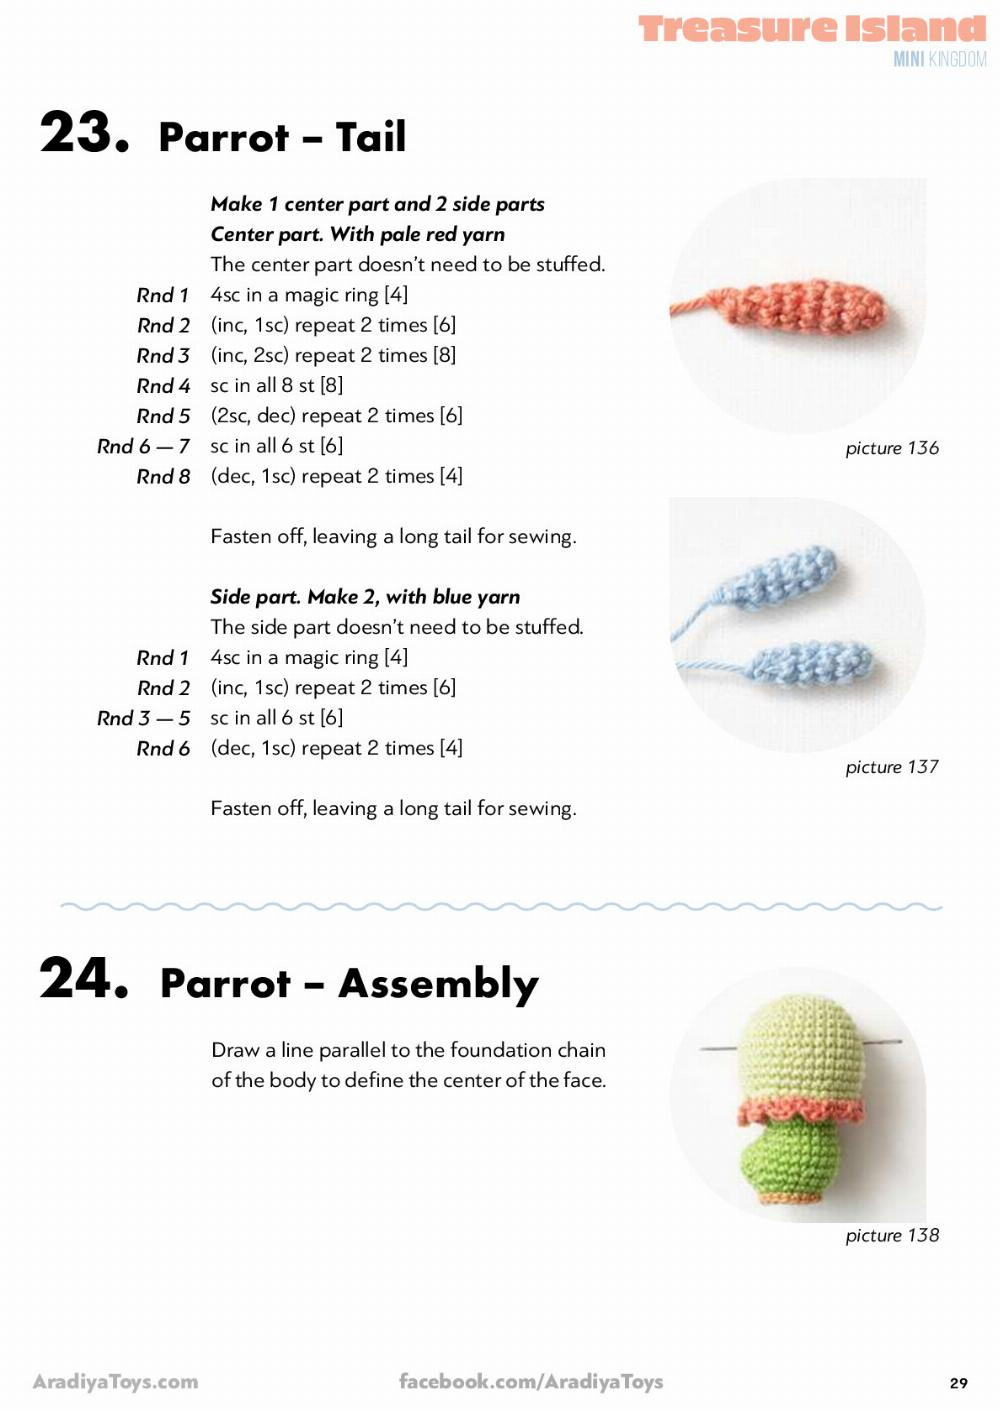 Parrot toy crochet pattern